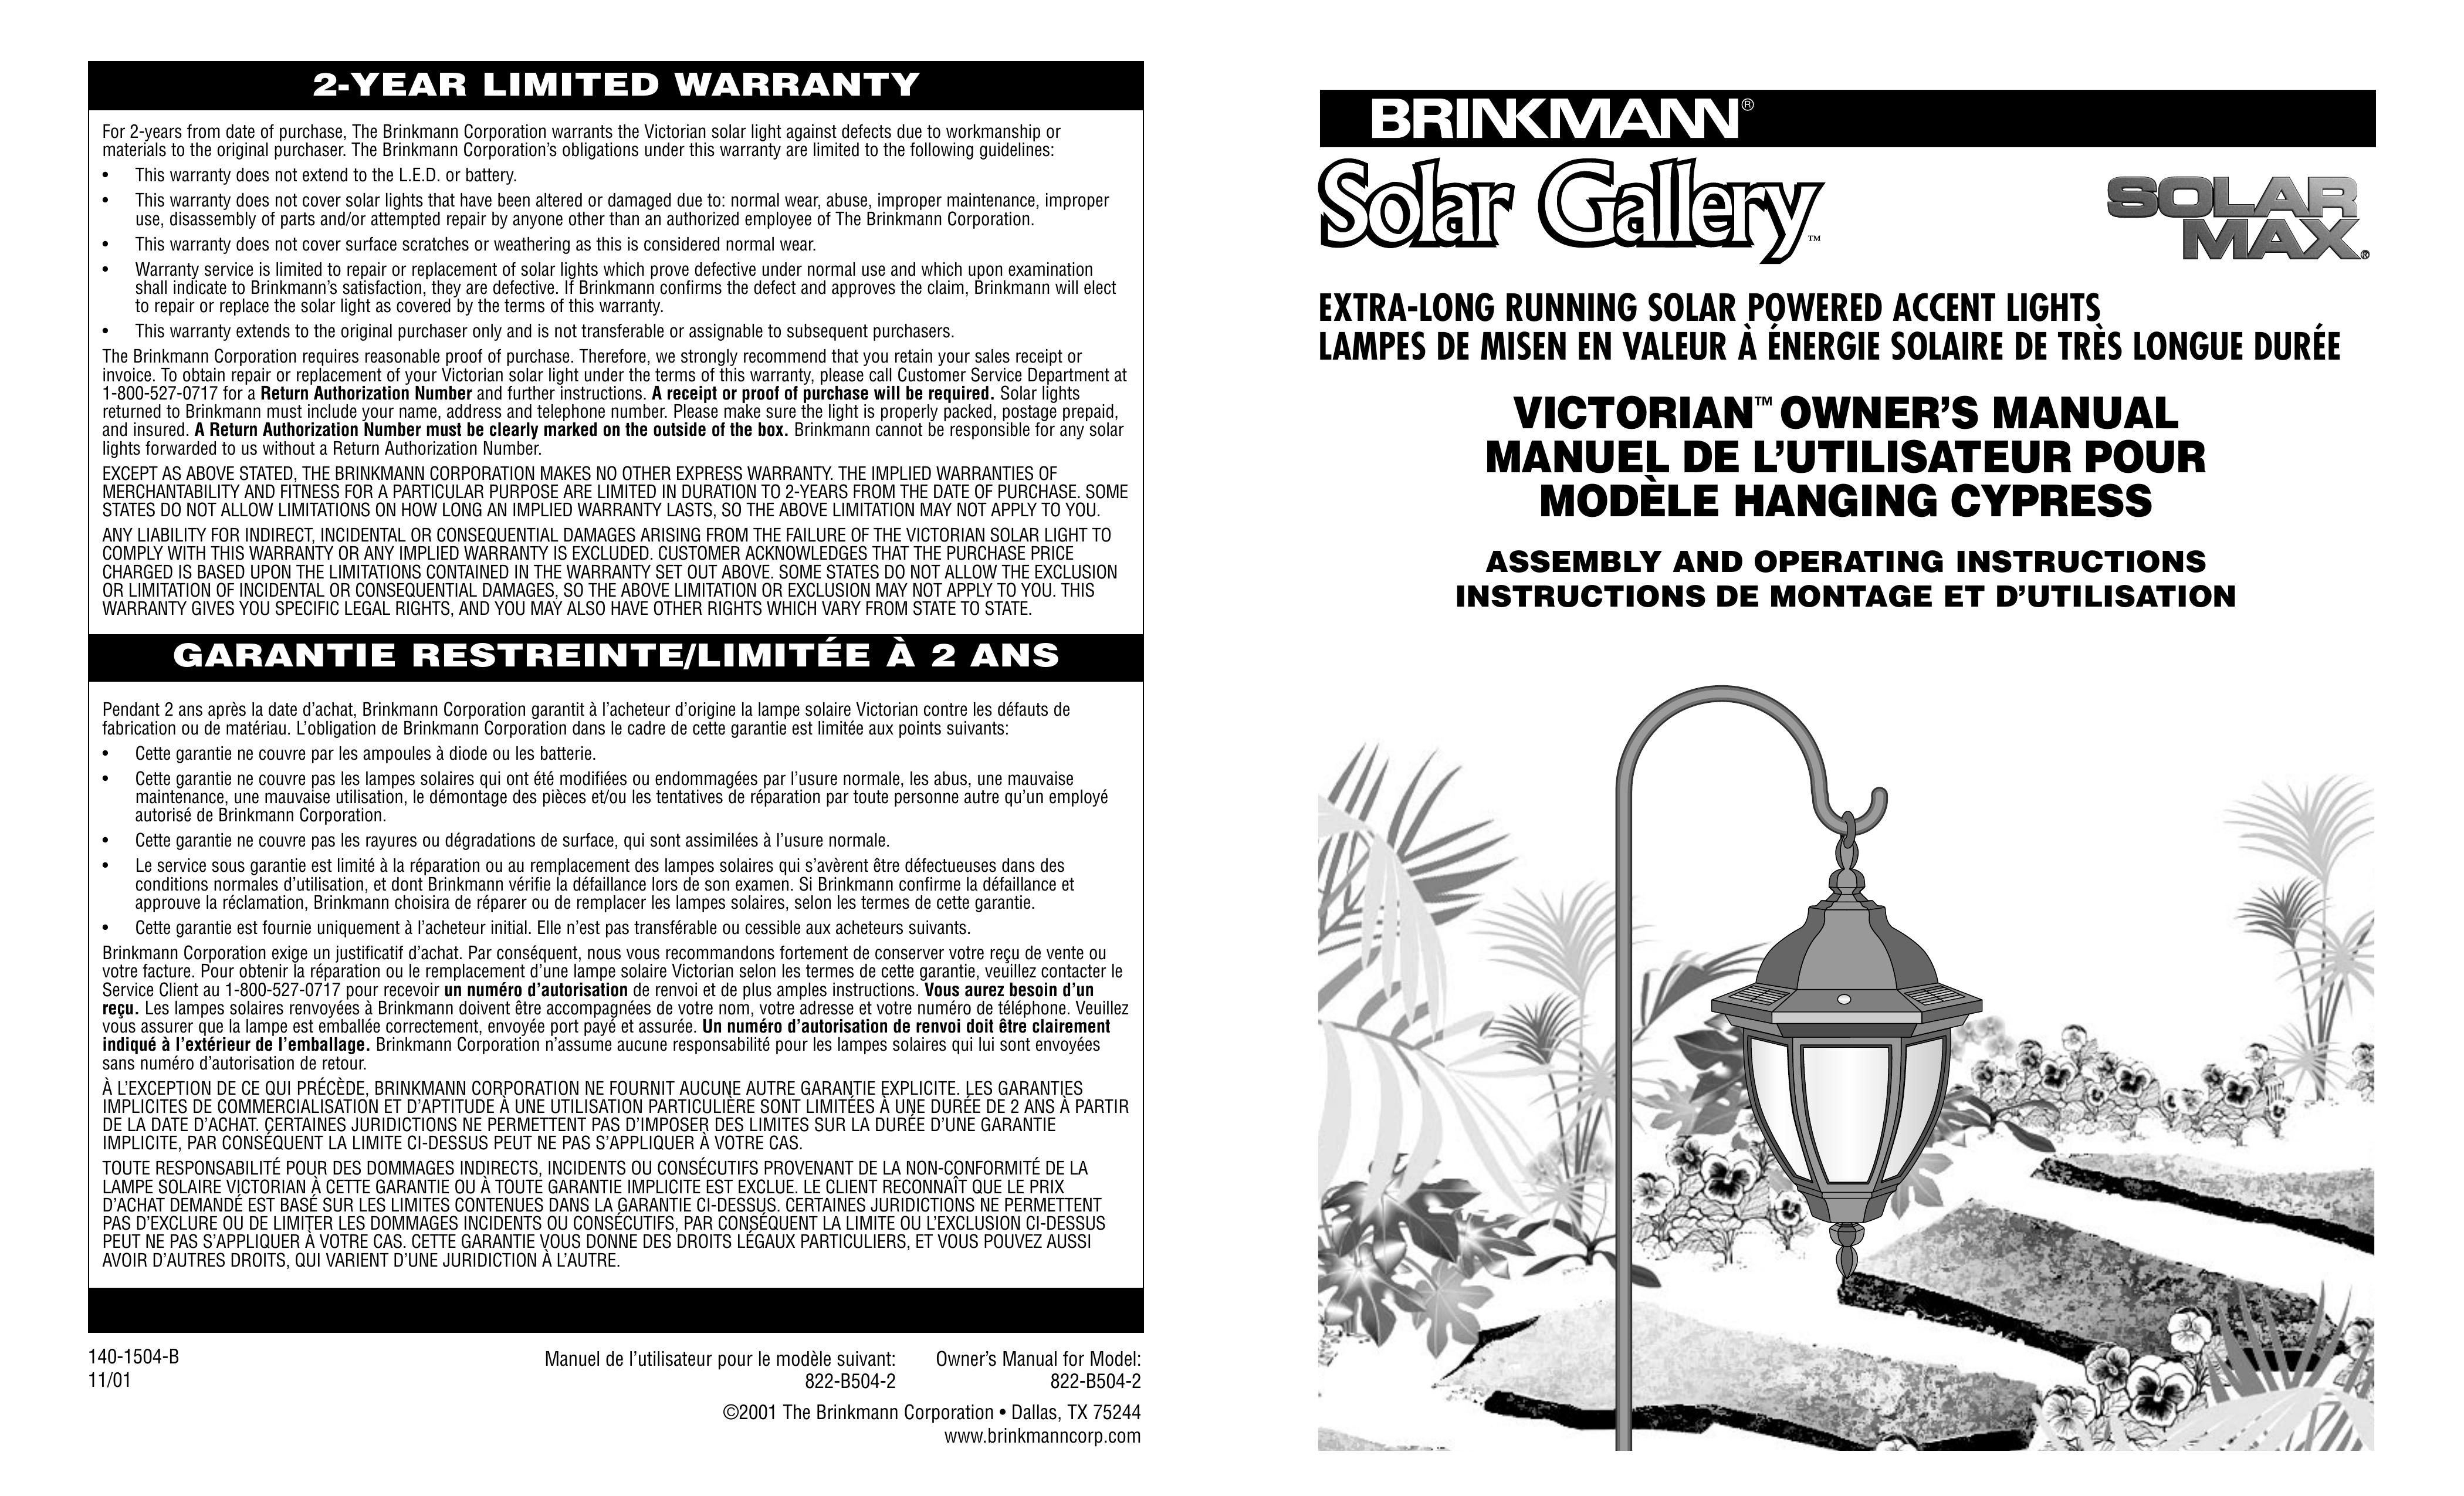 Brinkmann 822-B504-2 Landscape Lighting User Manual